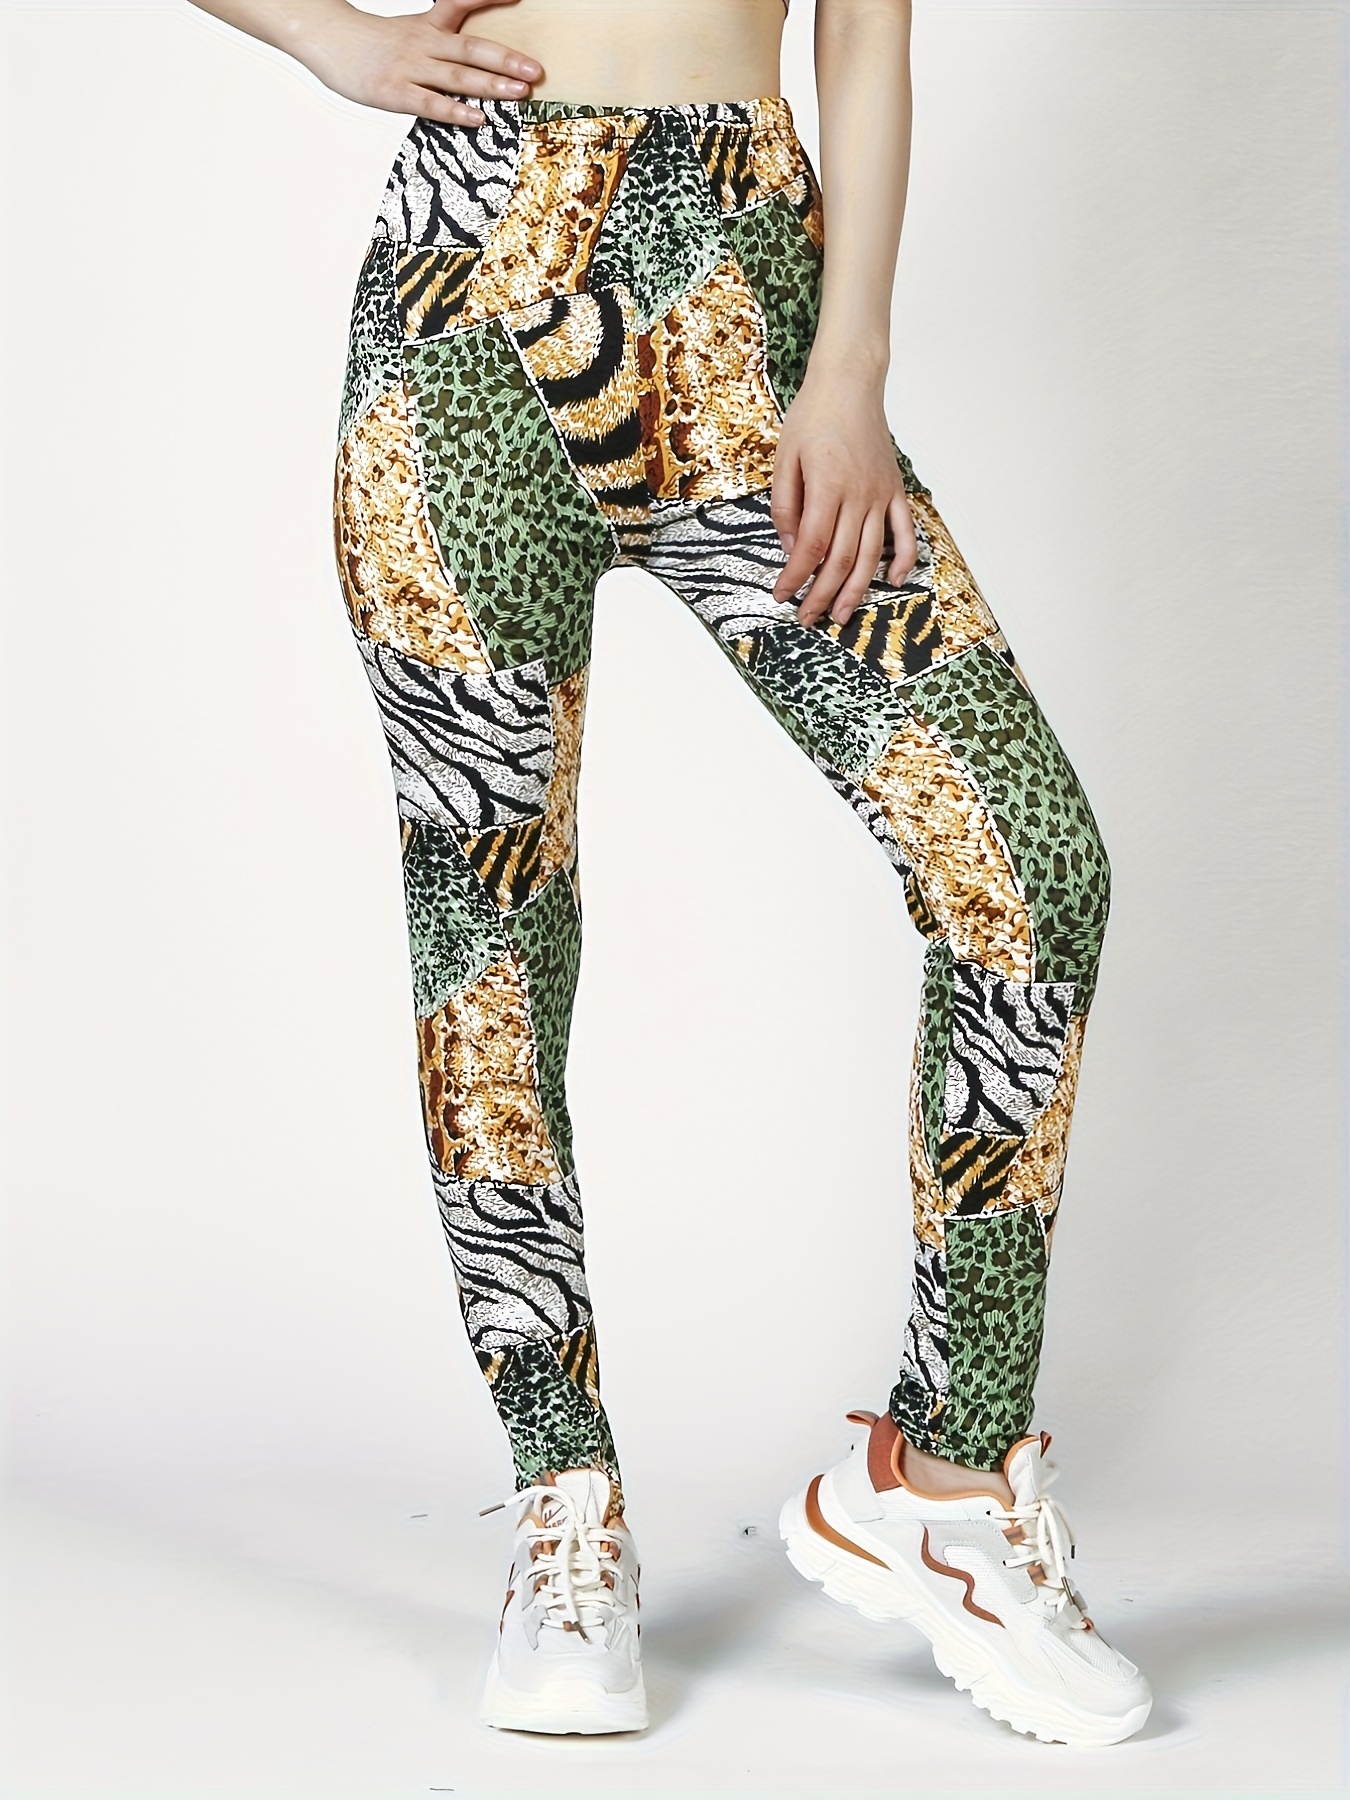 Neon Leopard Print Kids 80s Costume Leggings